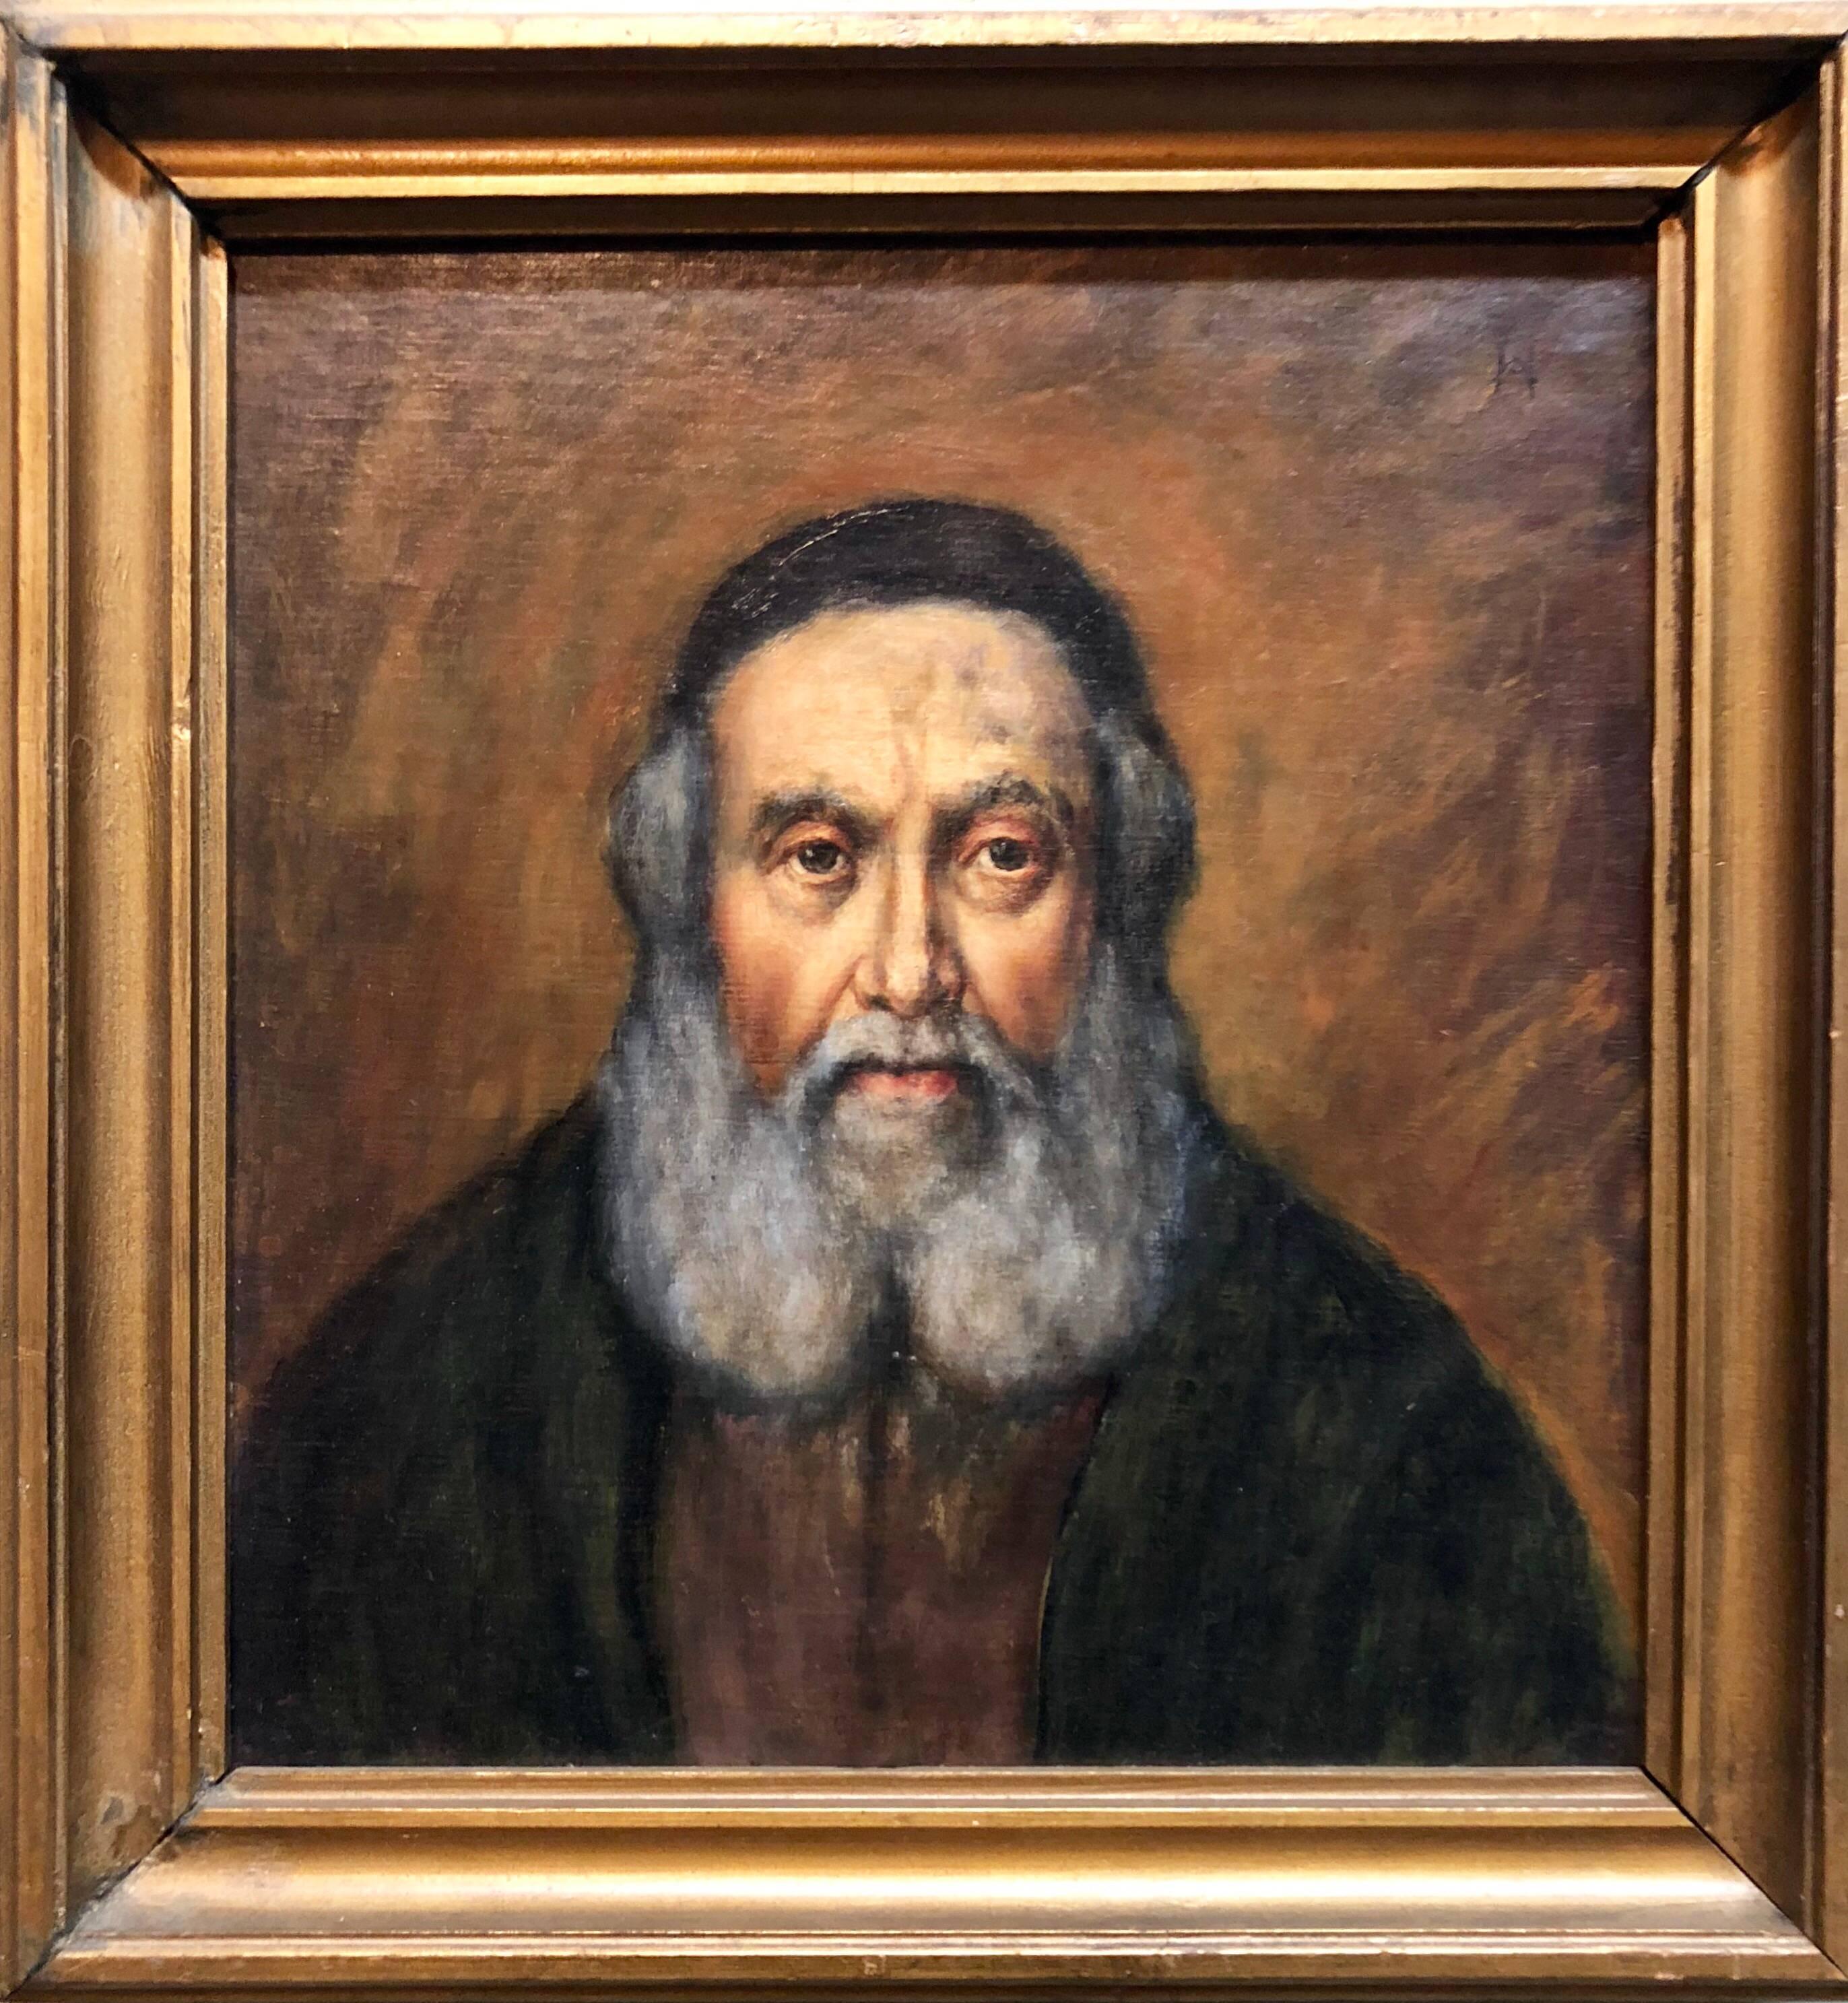 Charles Hannaford Portrait Painting -  Judaica "The Rebbe'" European Hasidic Rabbi Portrait Oil Painting